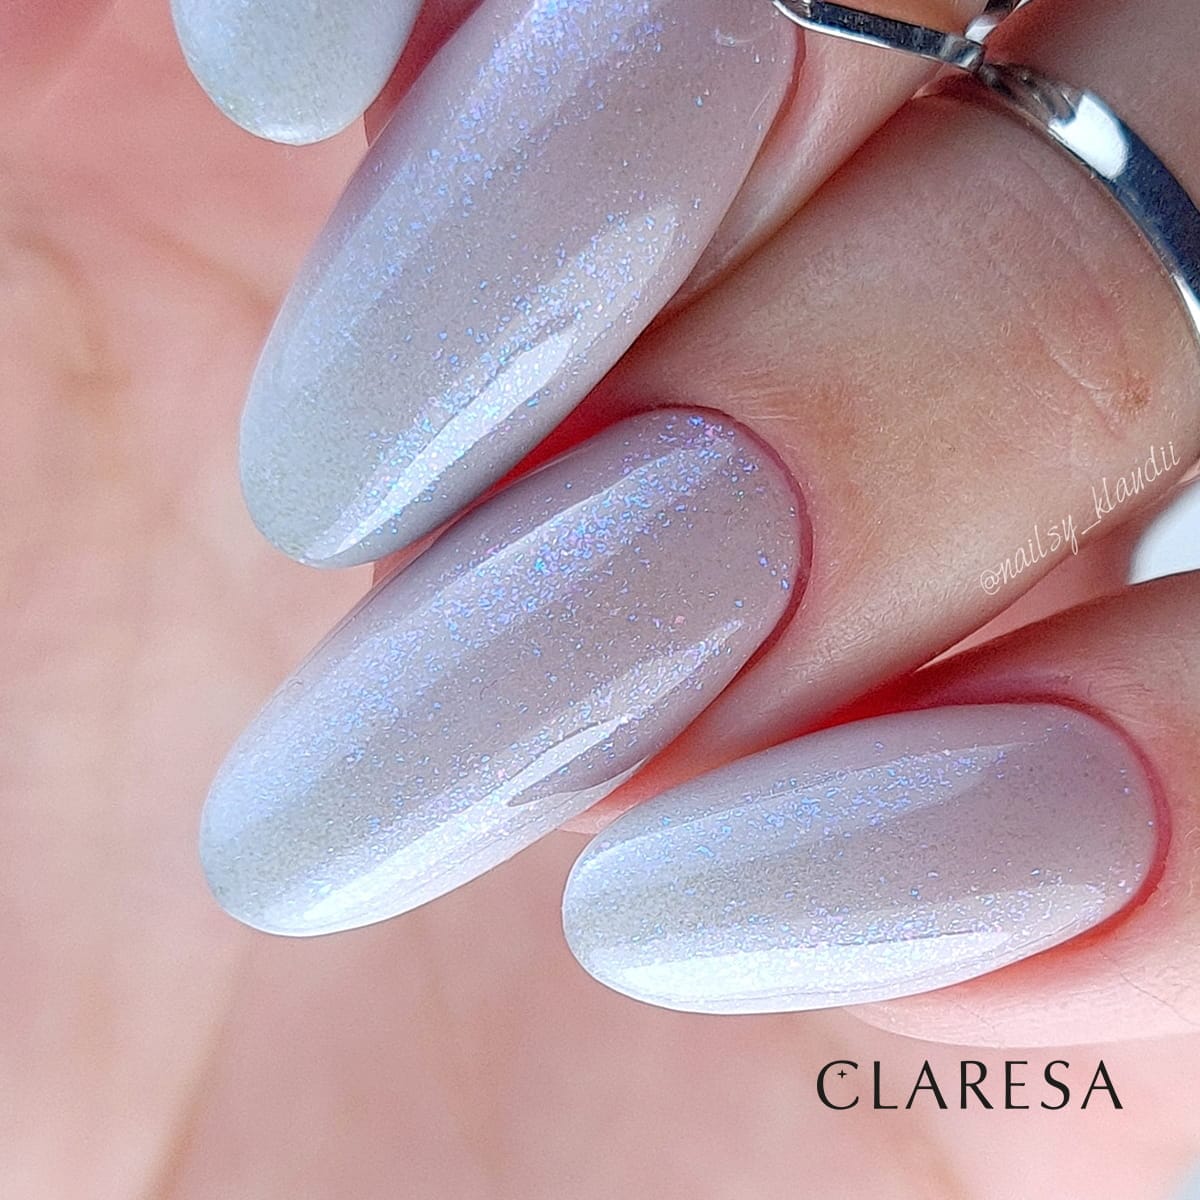 Claresa Top Coat - No Wipe Glitter Blue 5g